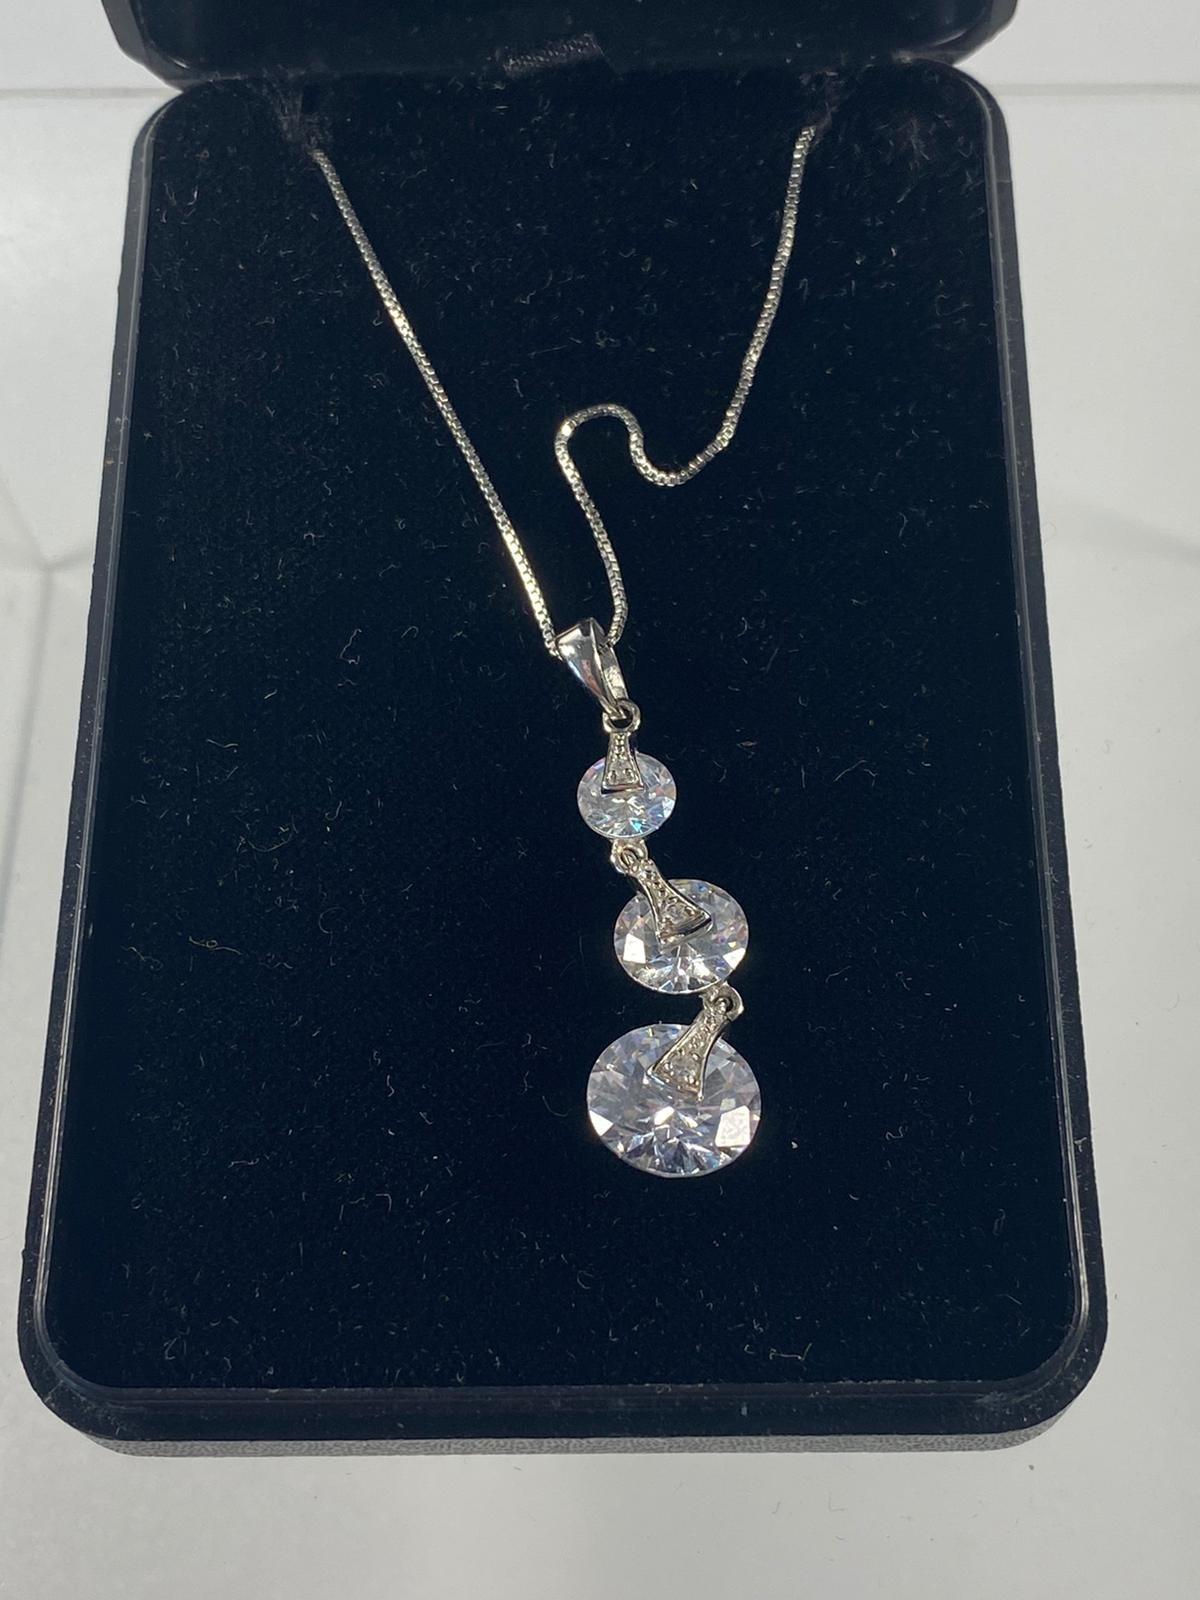 Silver necklace set in swarovski crystal pendant.